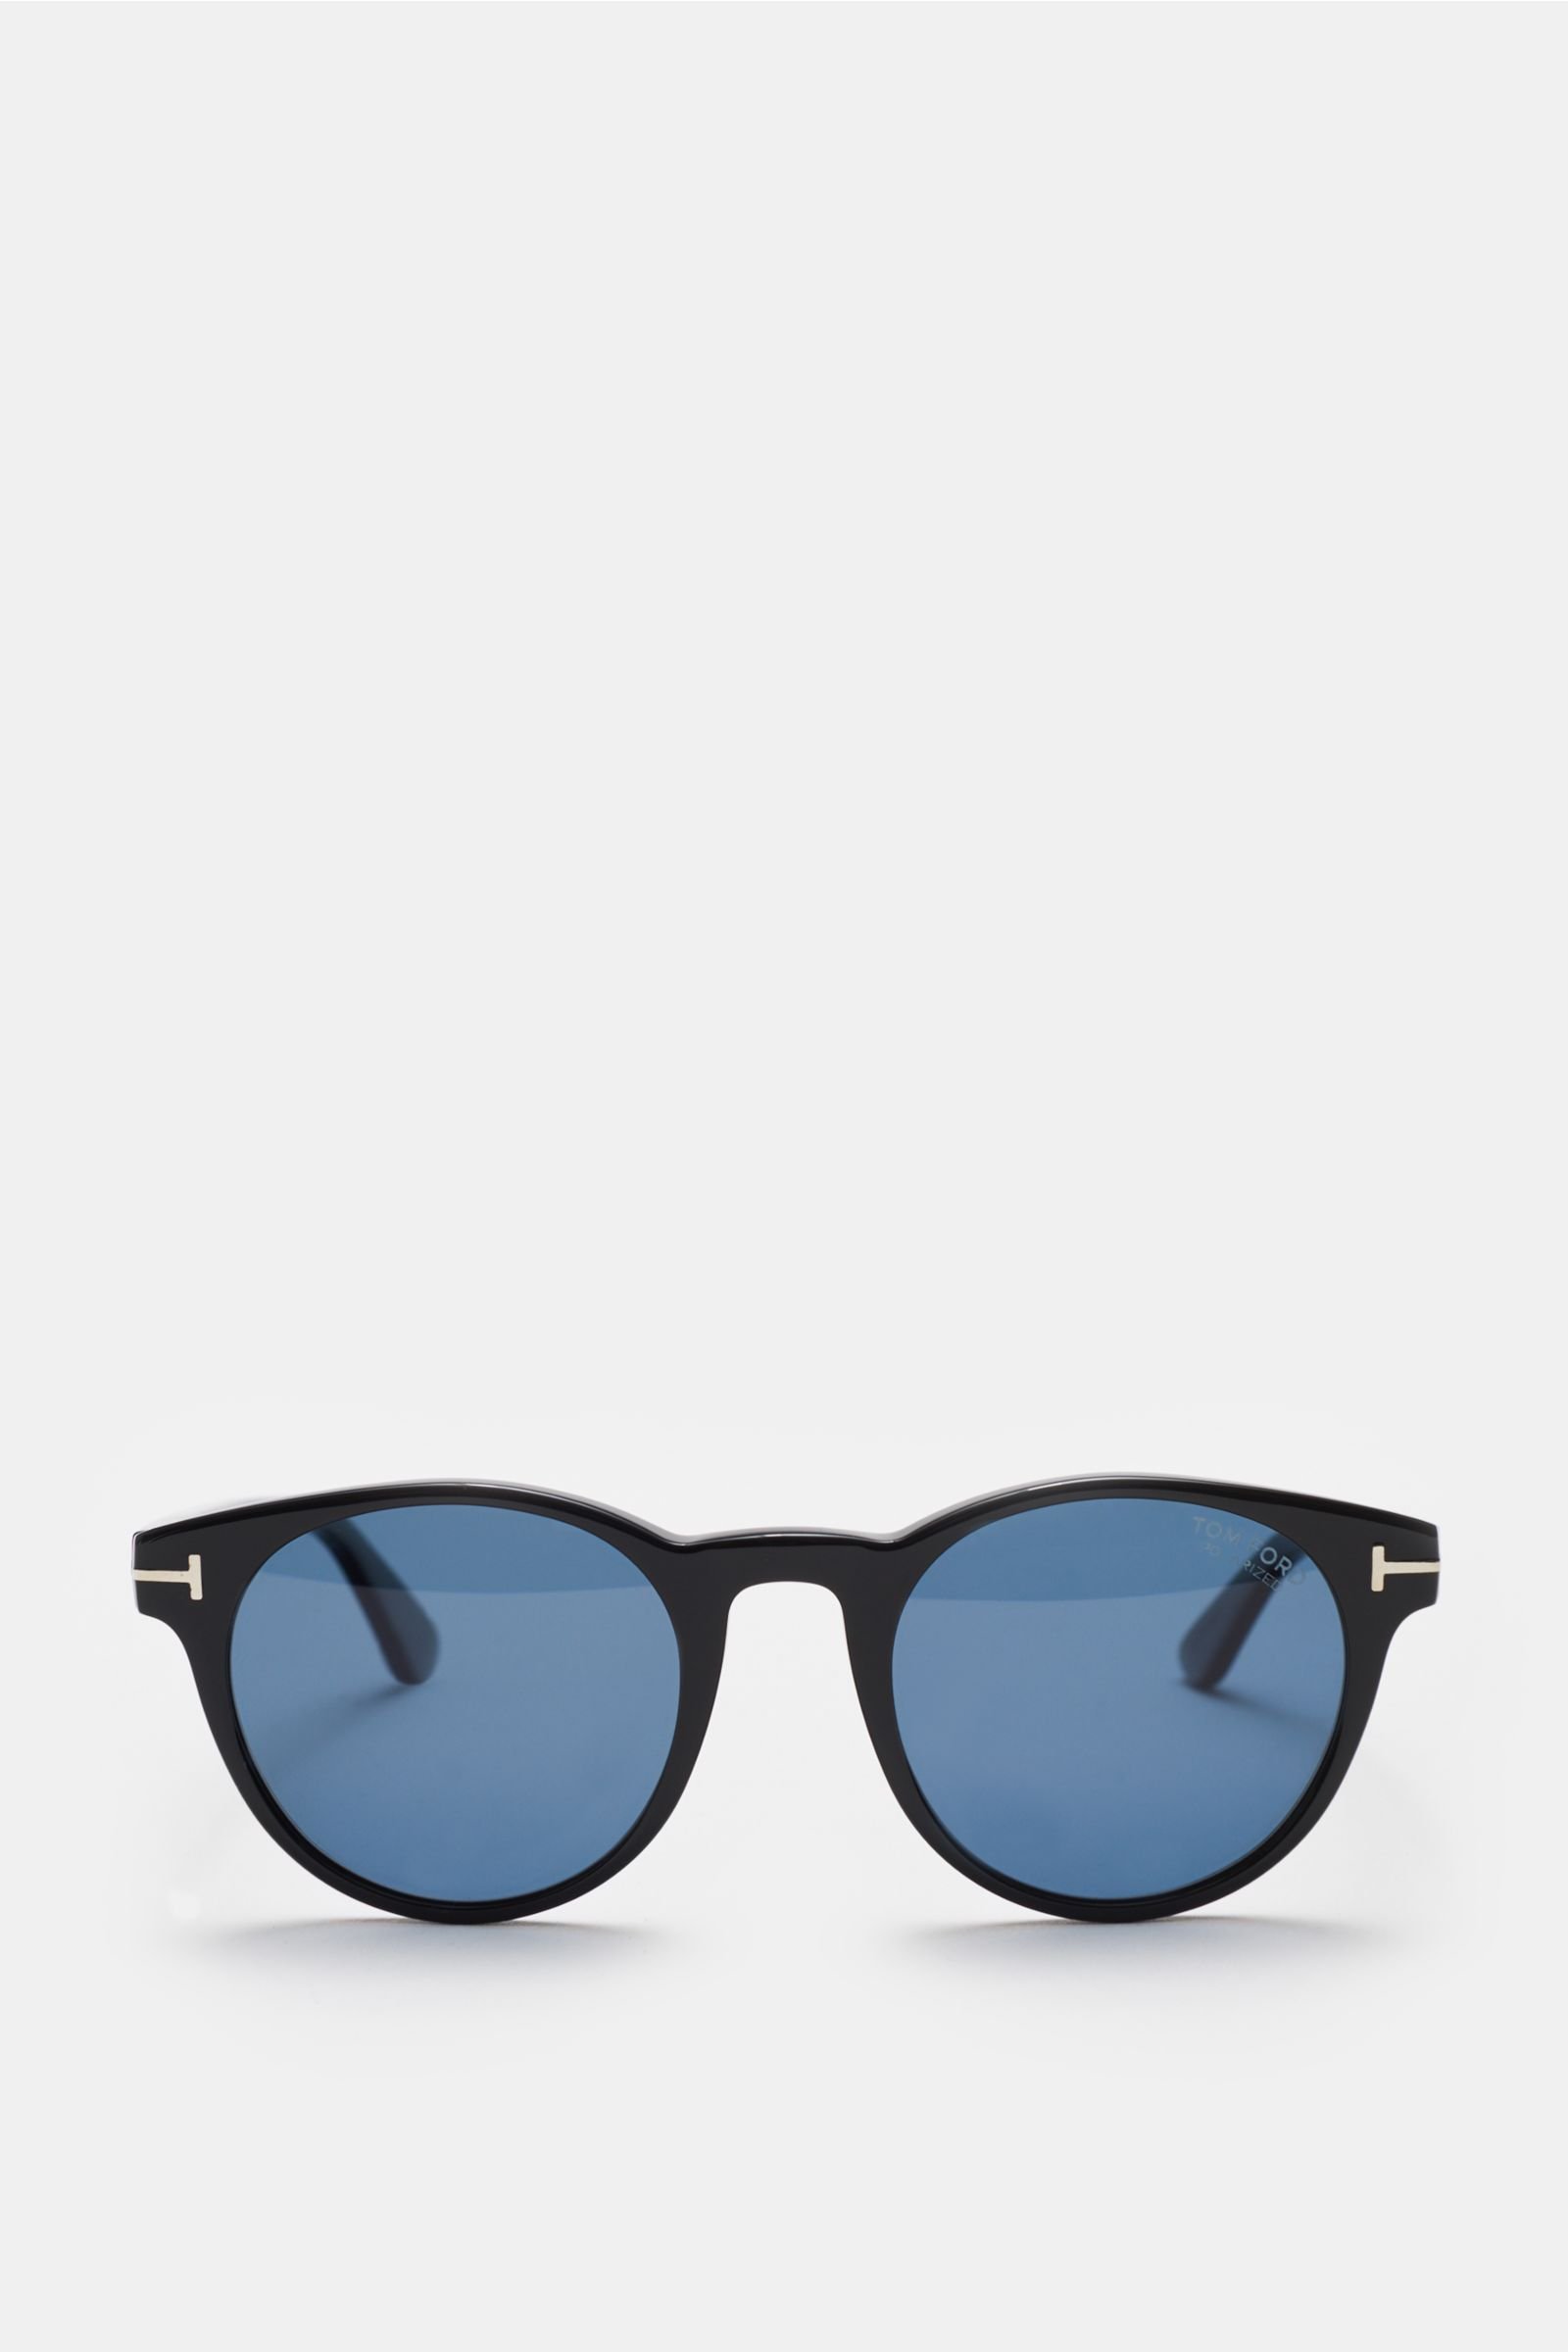 Sunglasses 'Palmer' black/blue